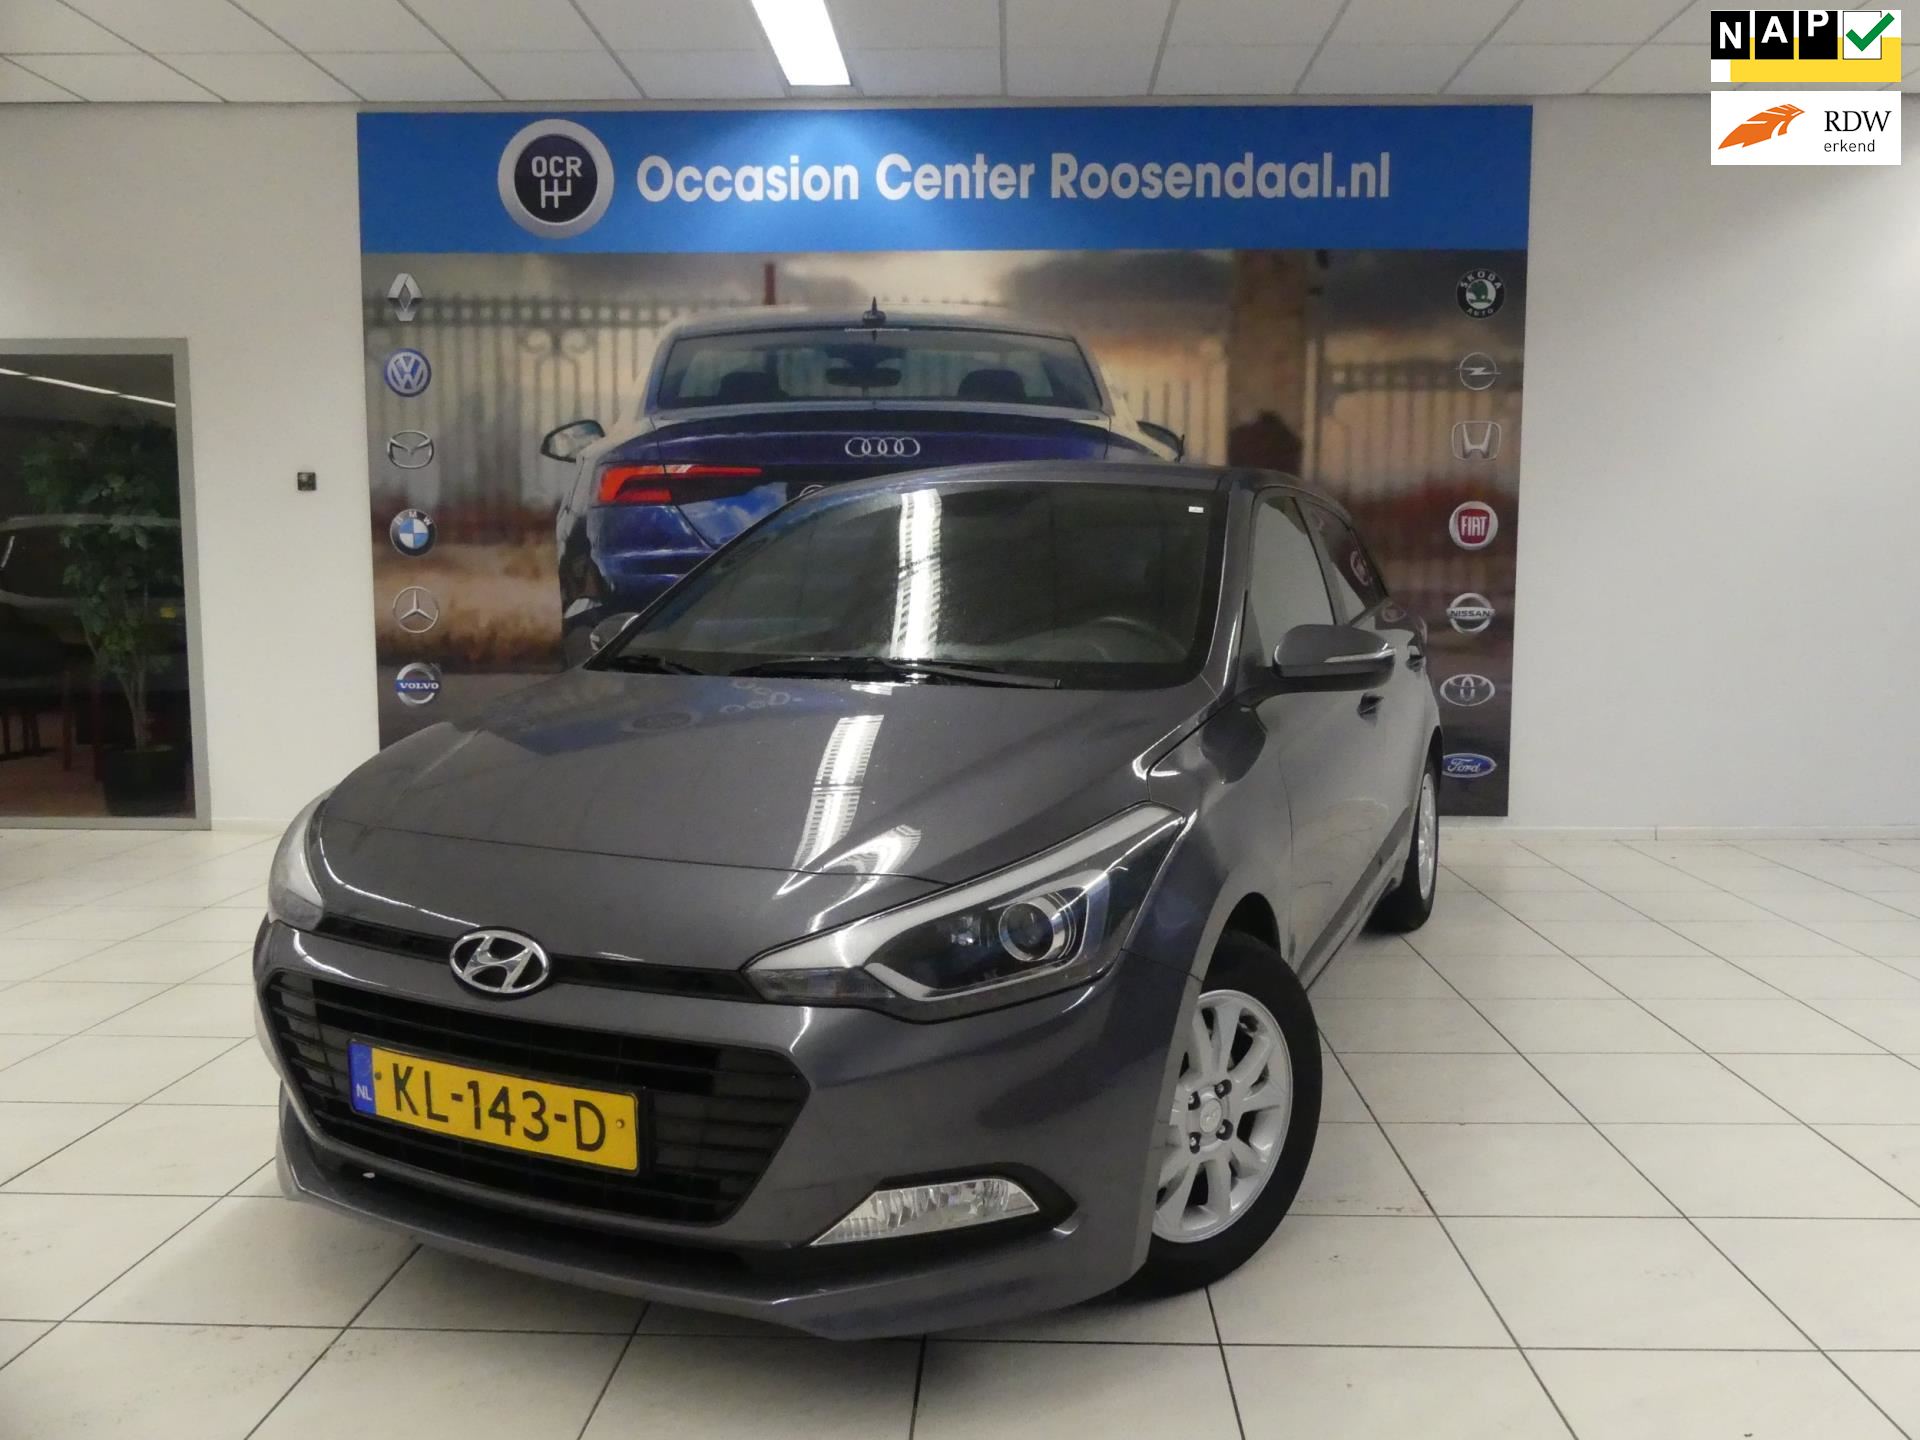 Hyundai I20 occasion - Occasion Center Roosendaal